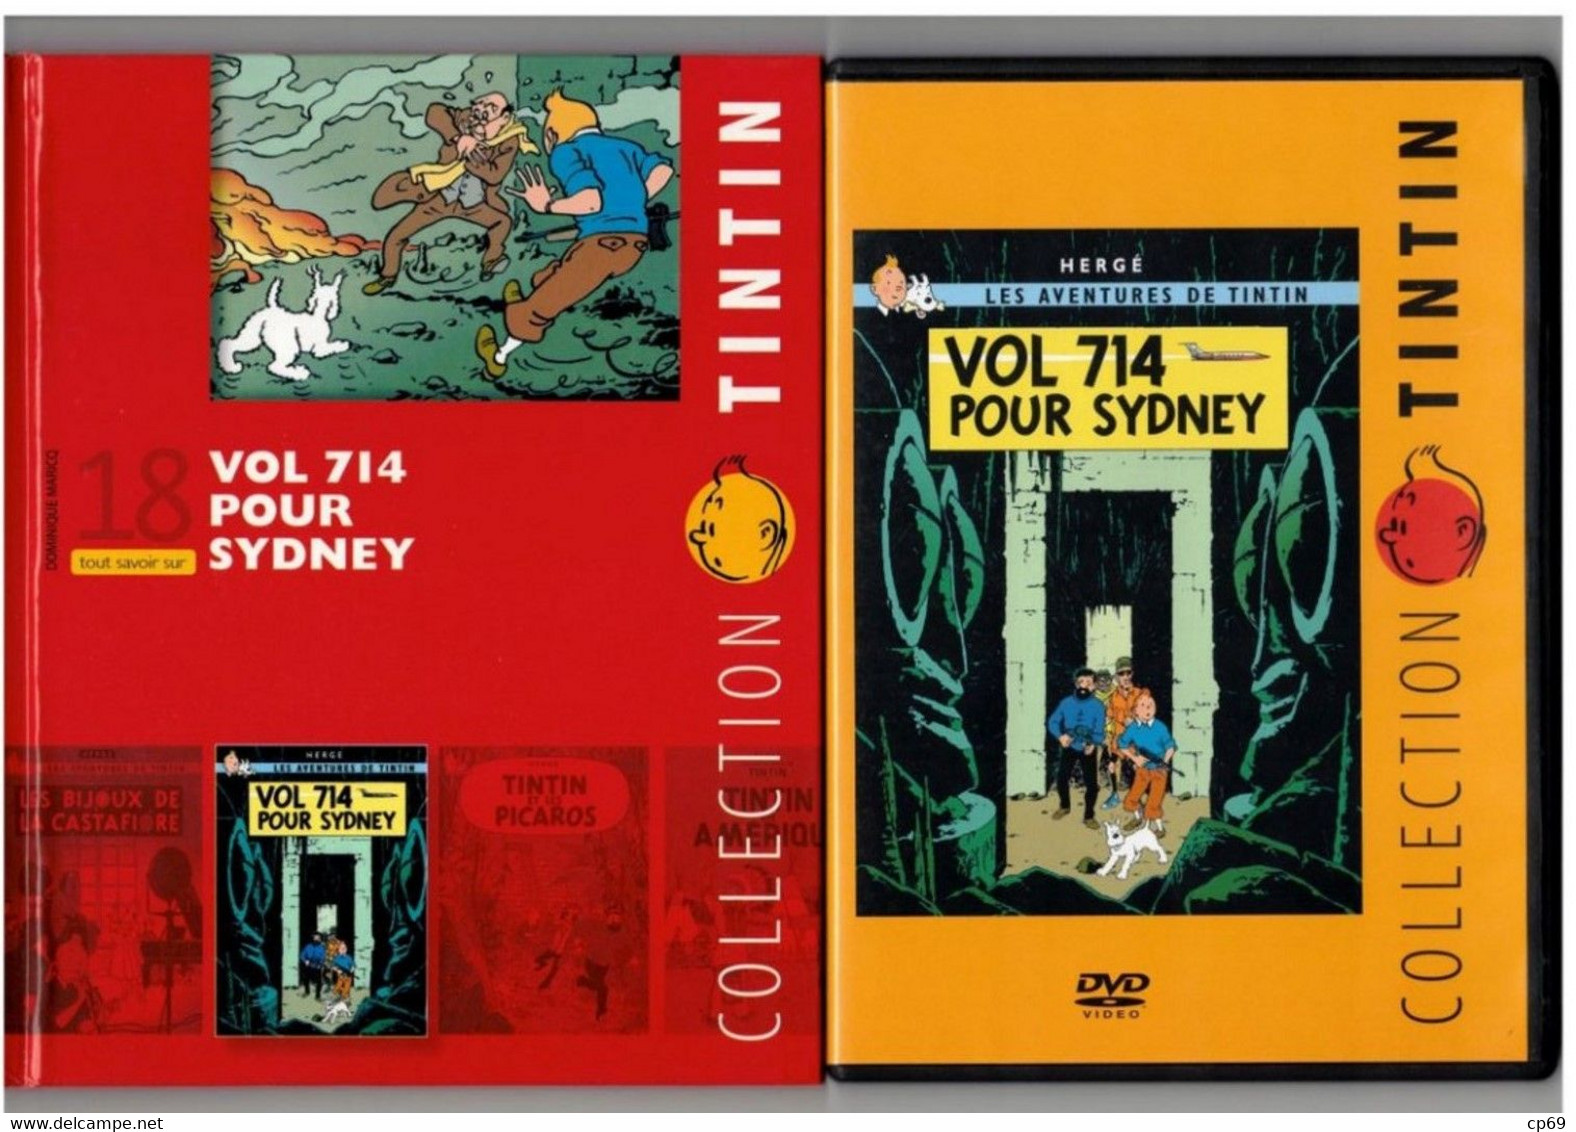 Tintin Hergé/Moulinsart 2010 Milou Chien Dog Cane Vol 714 Pour Sydney N°18 Capitaine Haddock DVD + Livret Explicatif B.E - Dibujos Animados